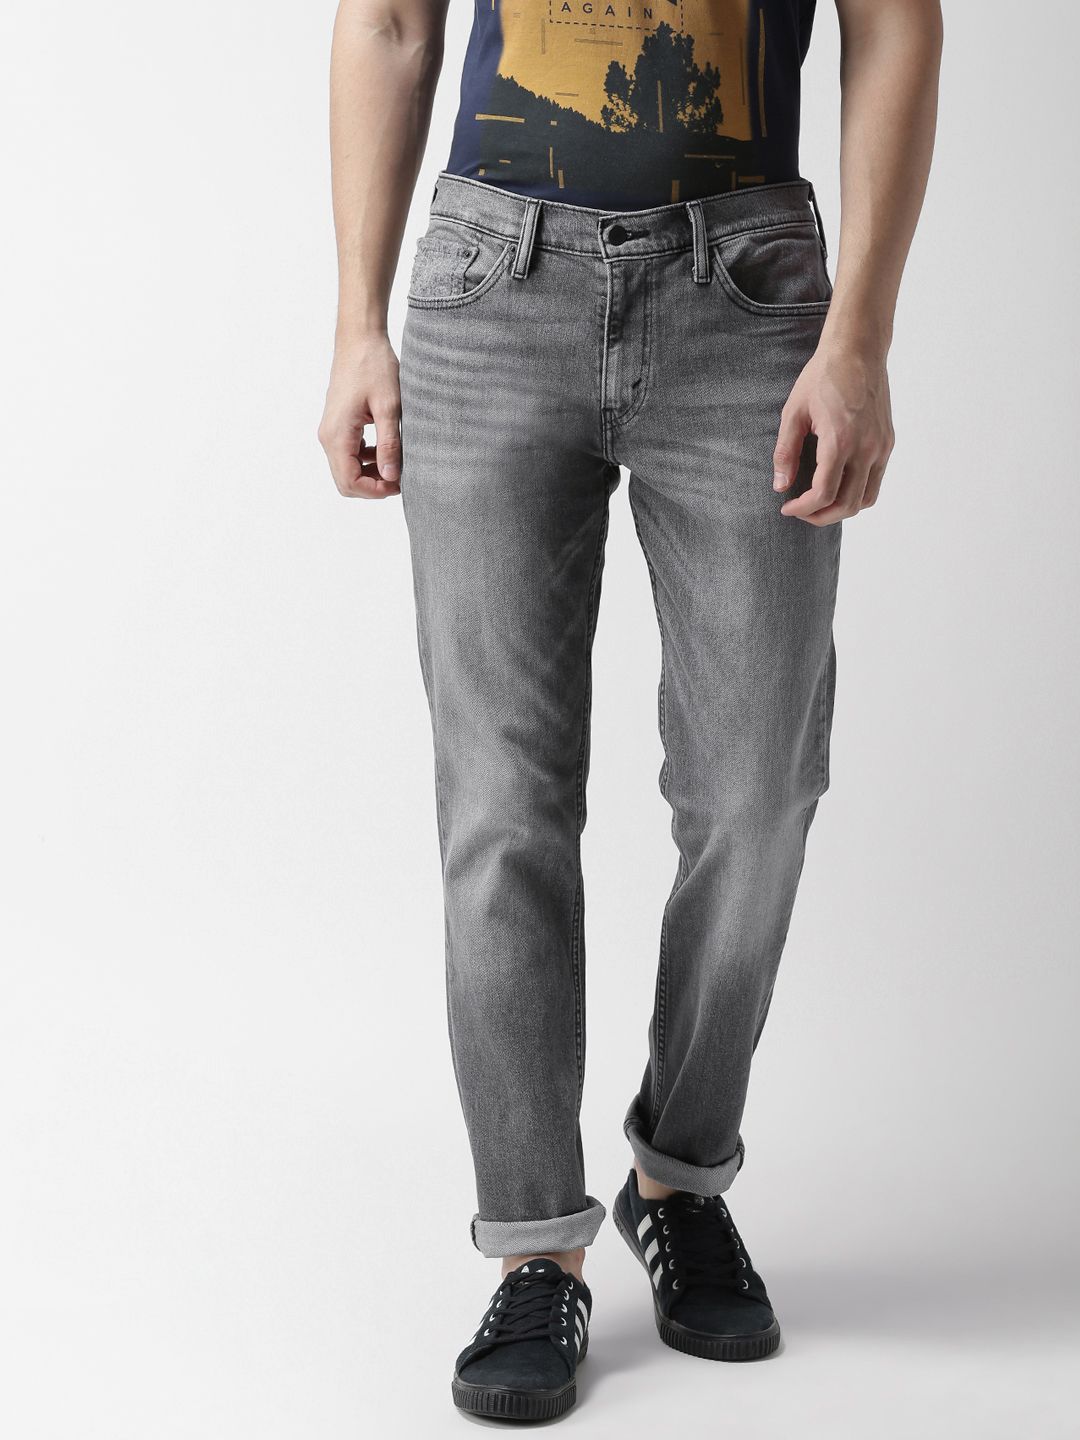 Levis Grey Slim Fit Jeans for men price - Best buy price in India October 2018 detail & trends ...